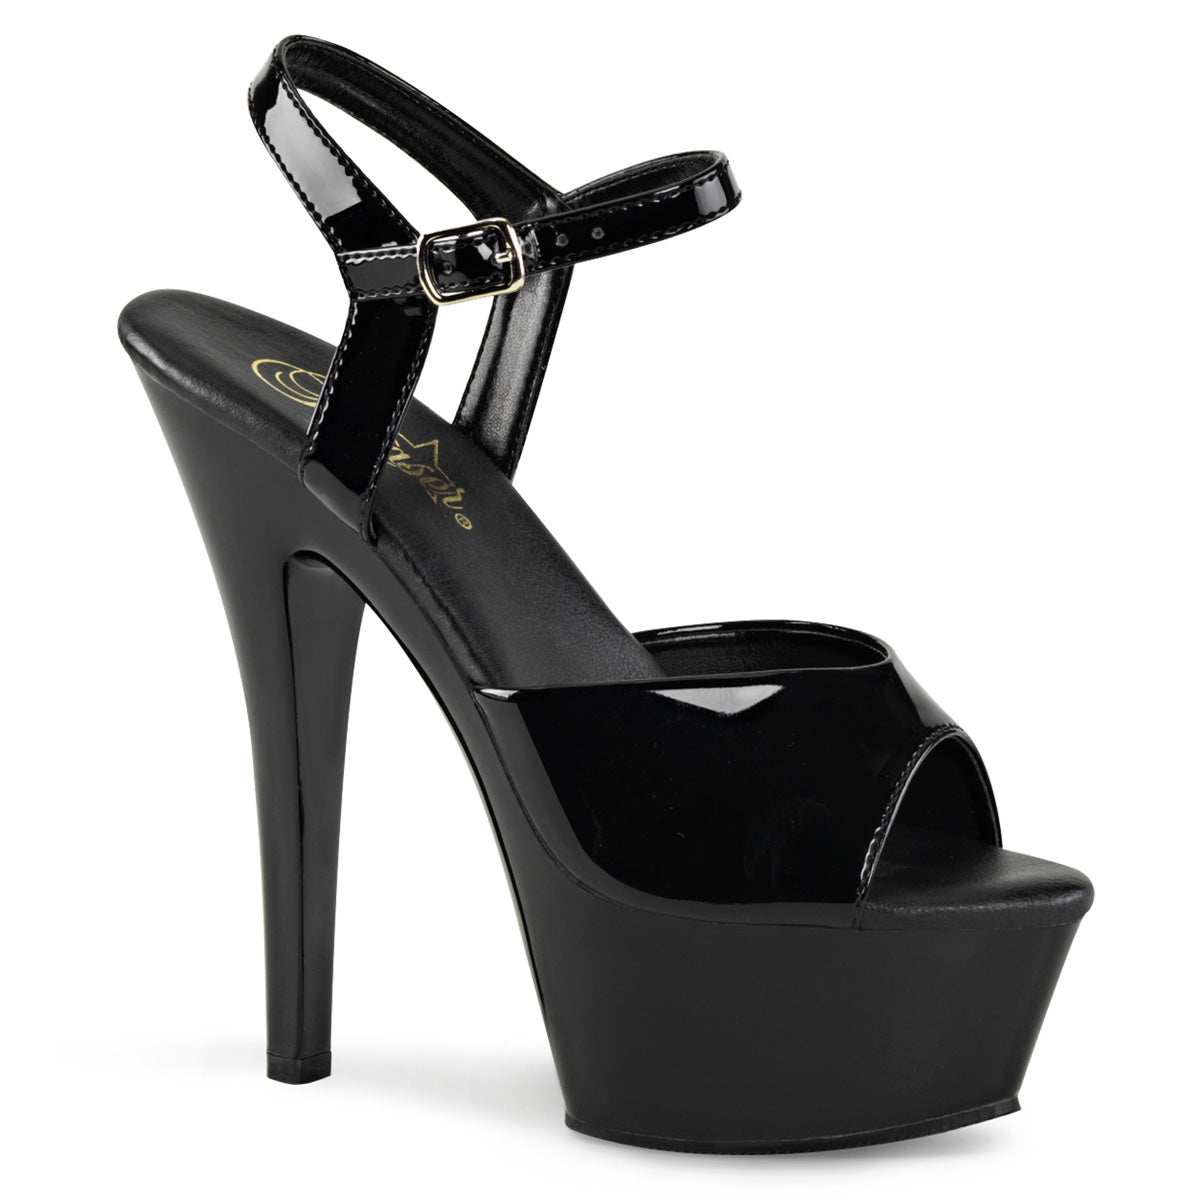 KISS-209VL Black Patent Platform Sandal Pleaser